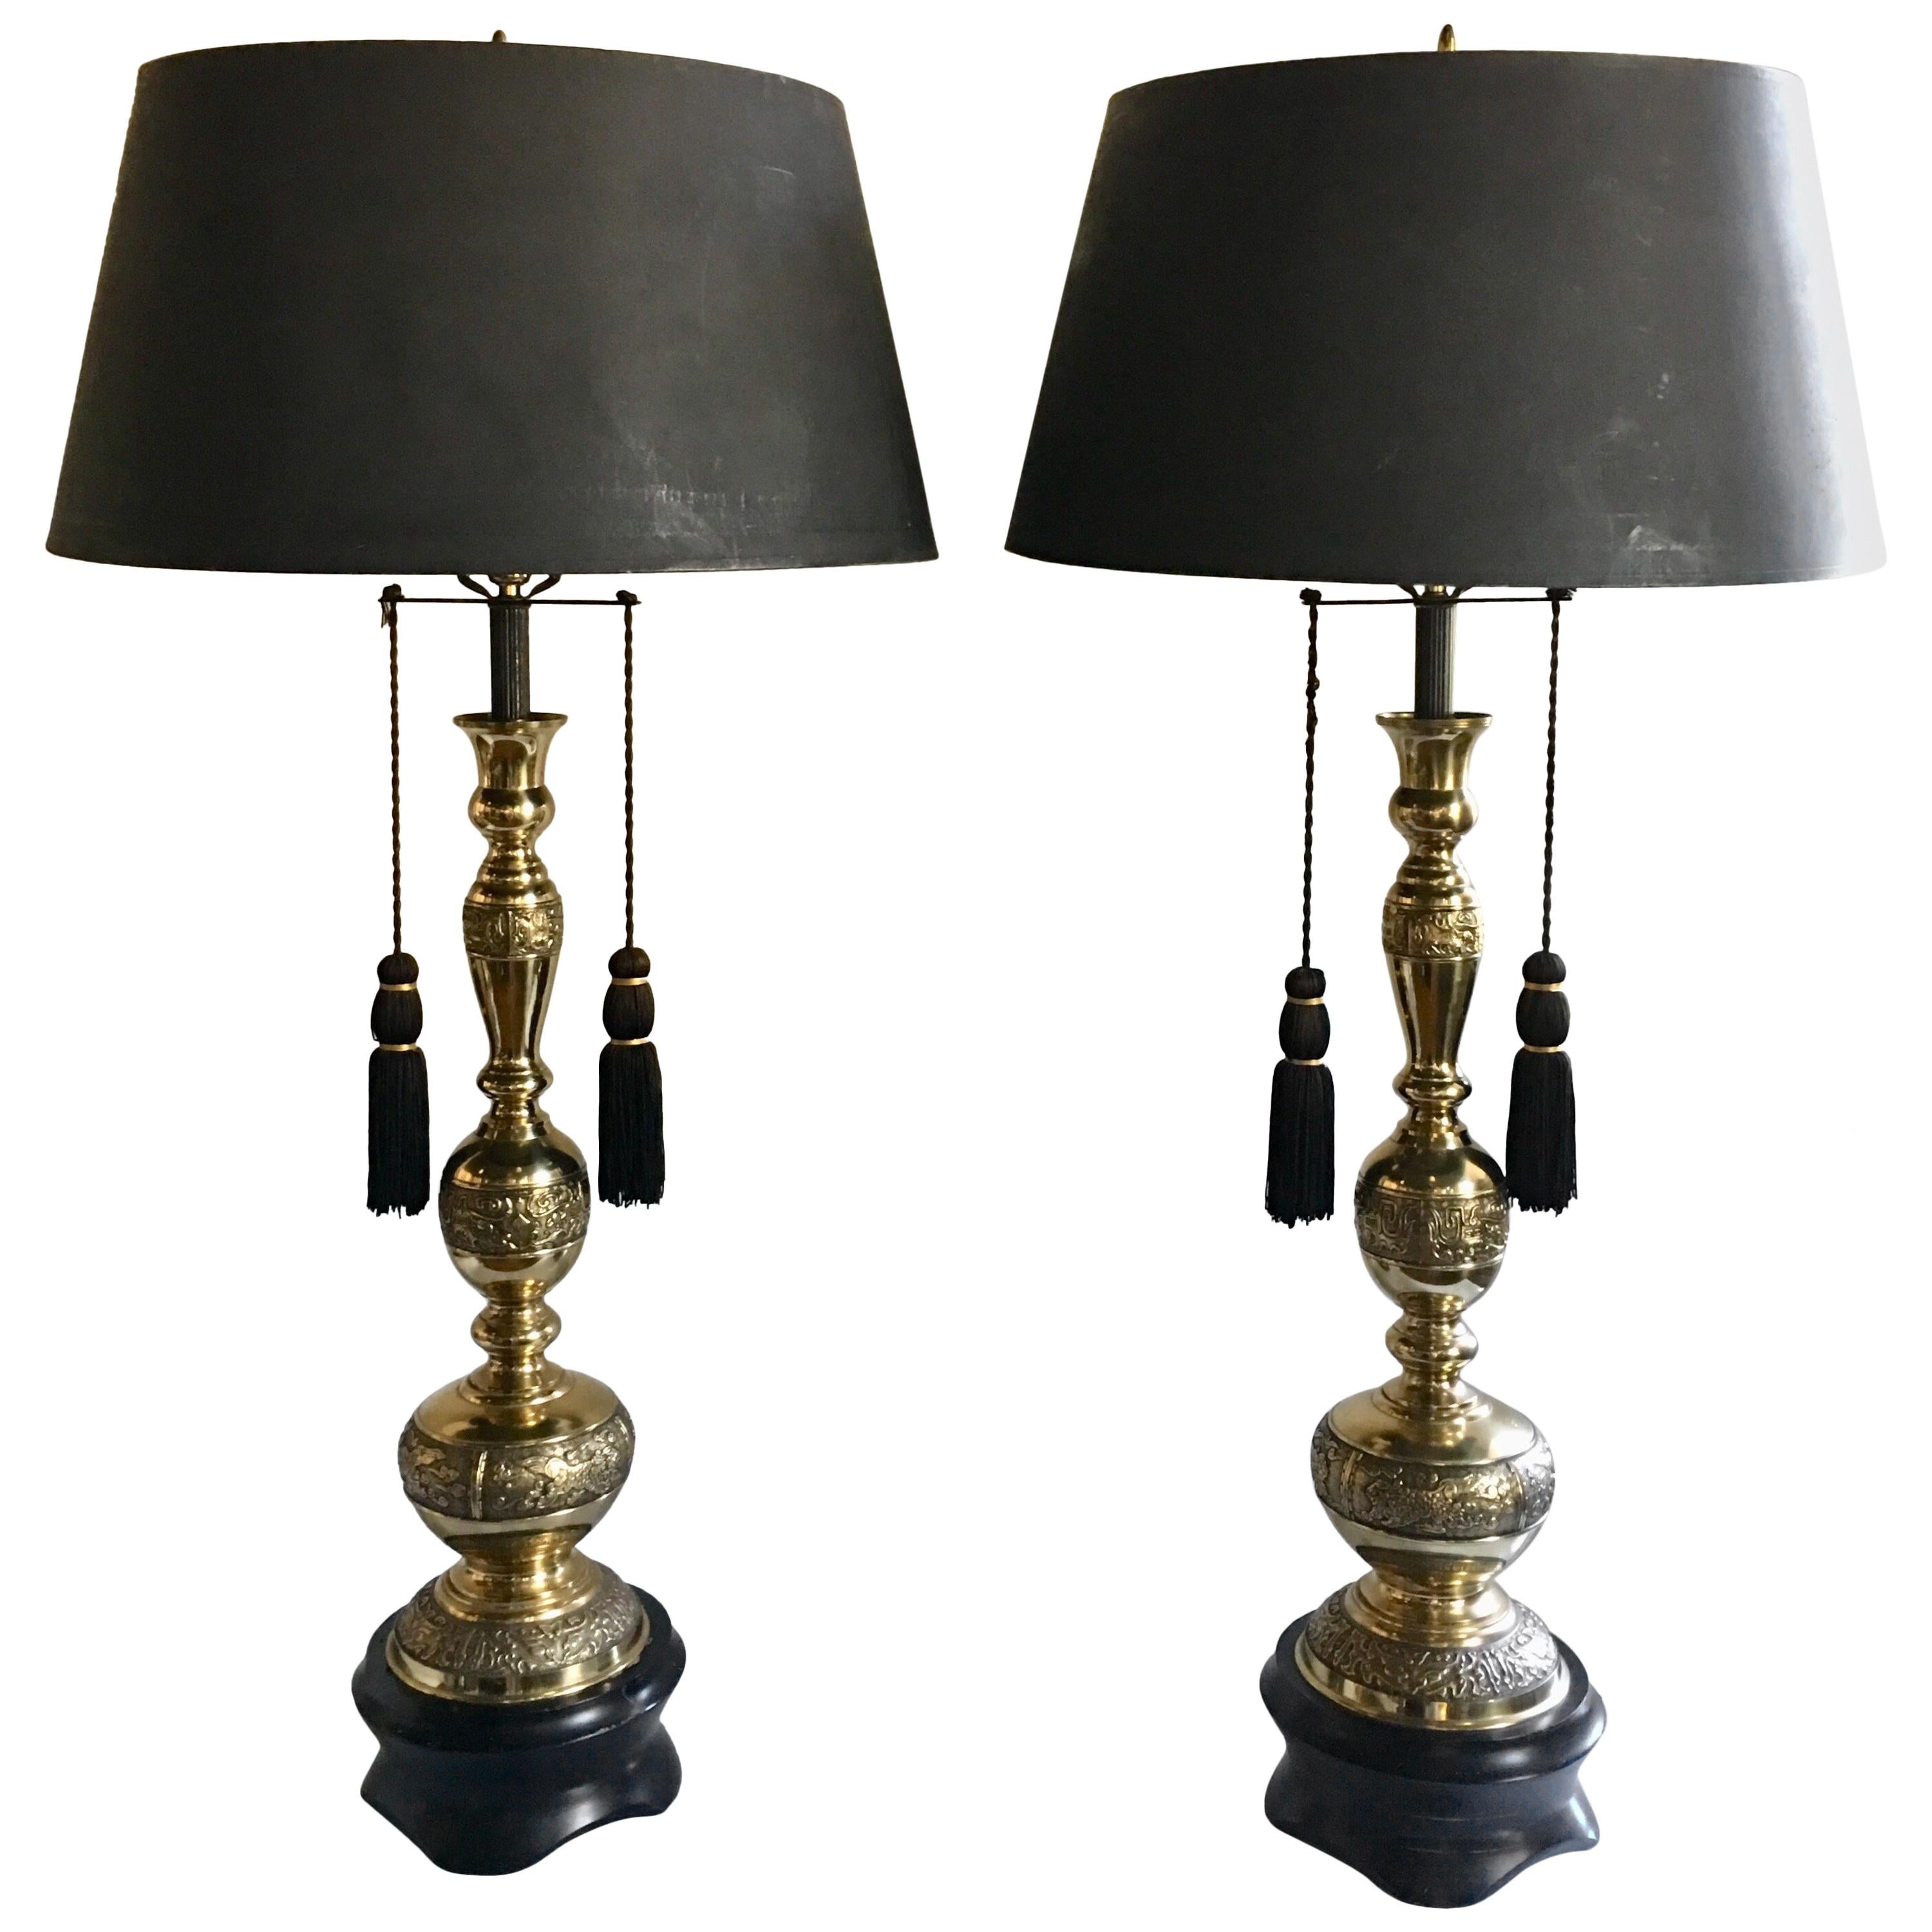 Greek Key Motif James Mont Style Mid-Century Modern Lamps, Pair